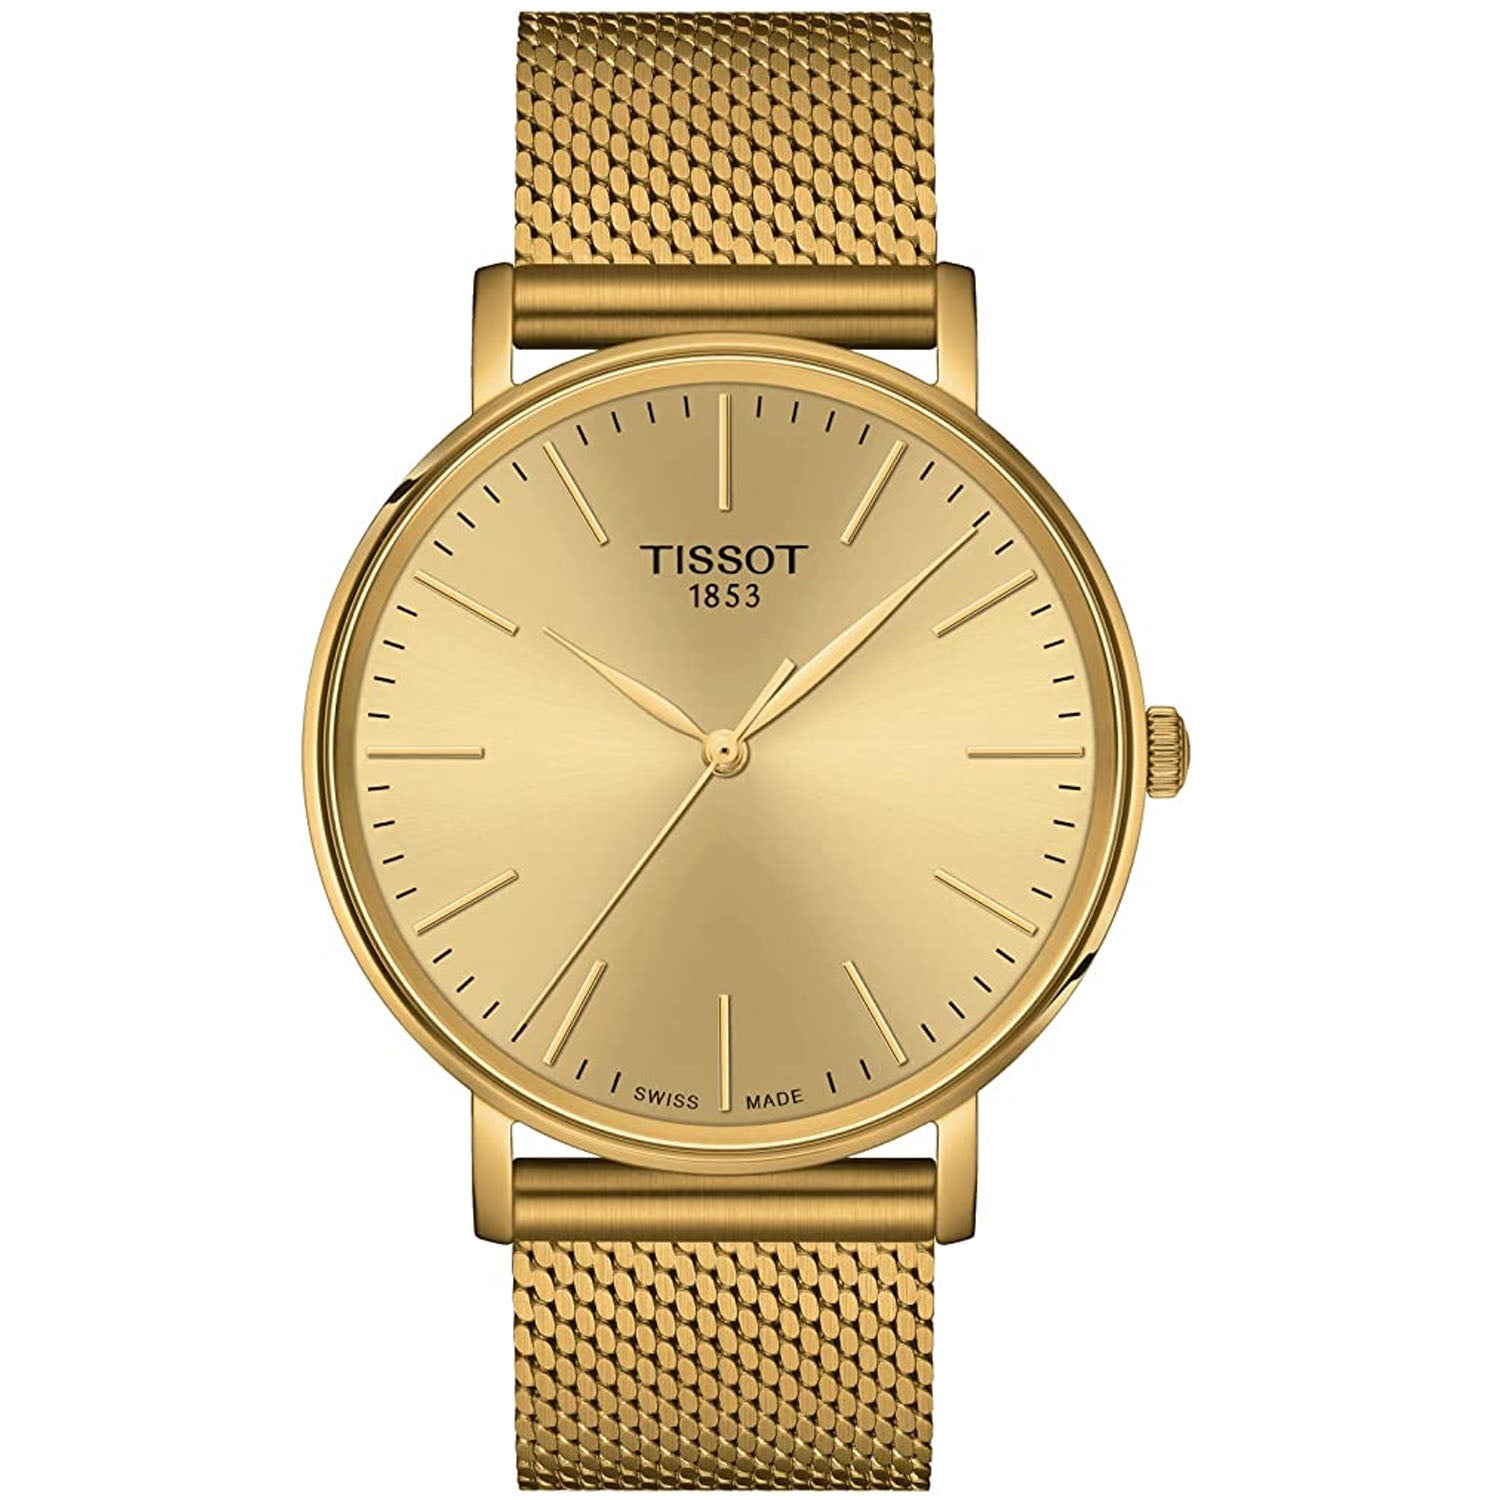 TISSOT Tissot Men's Everytime Gold Dial Watch